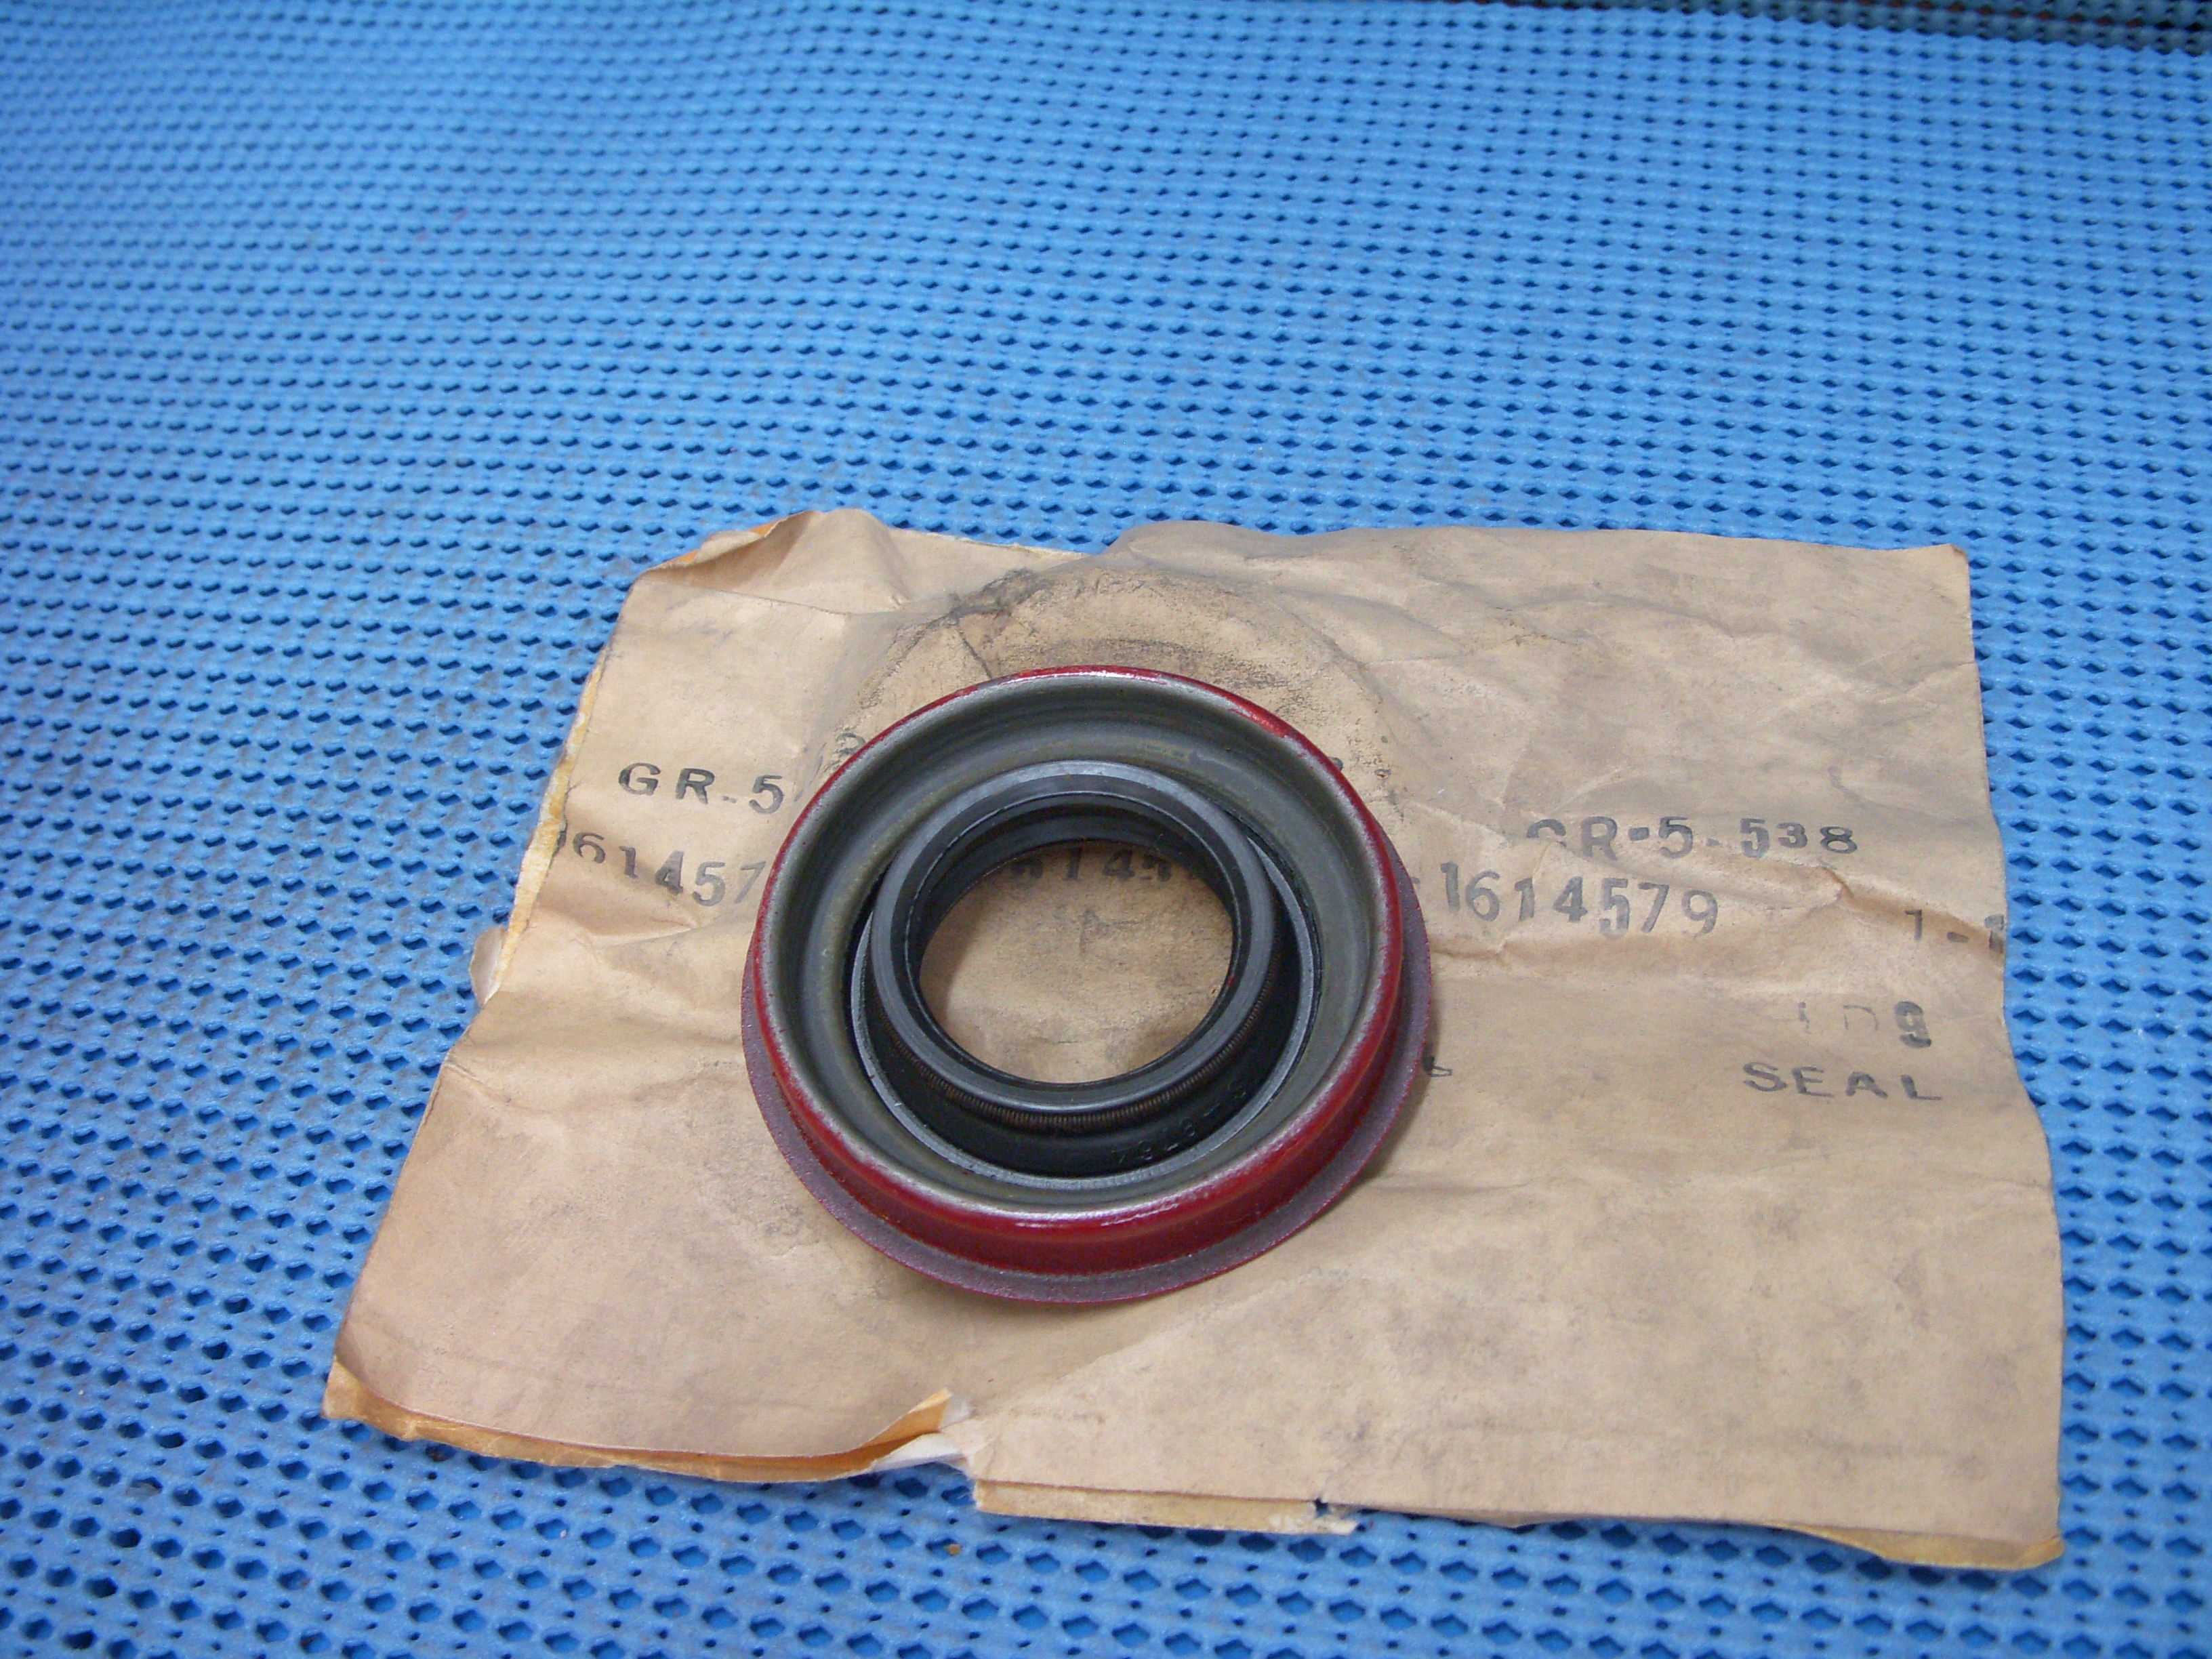 1979 - 1985 GM Final Drive Side Bearing Output Shaft Seal NOS # 1614579